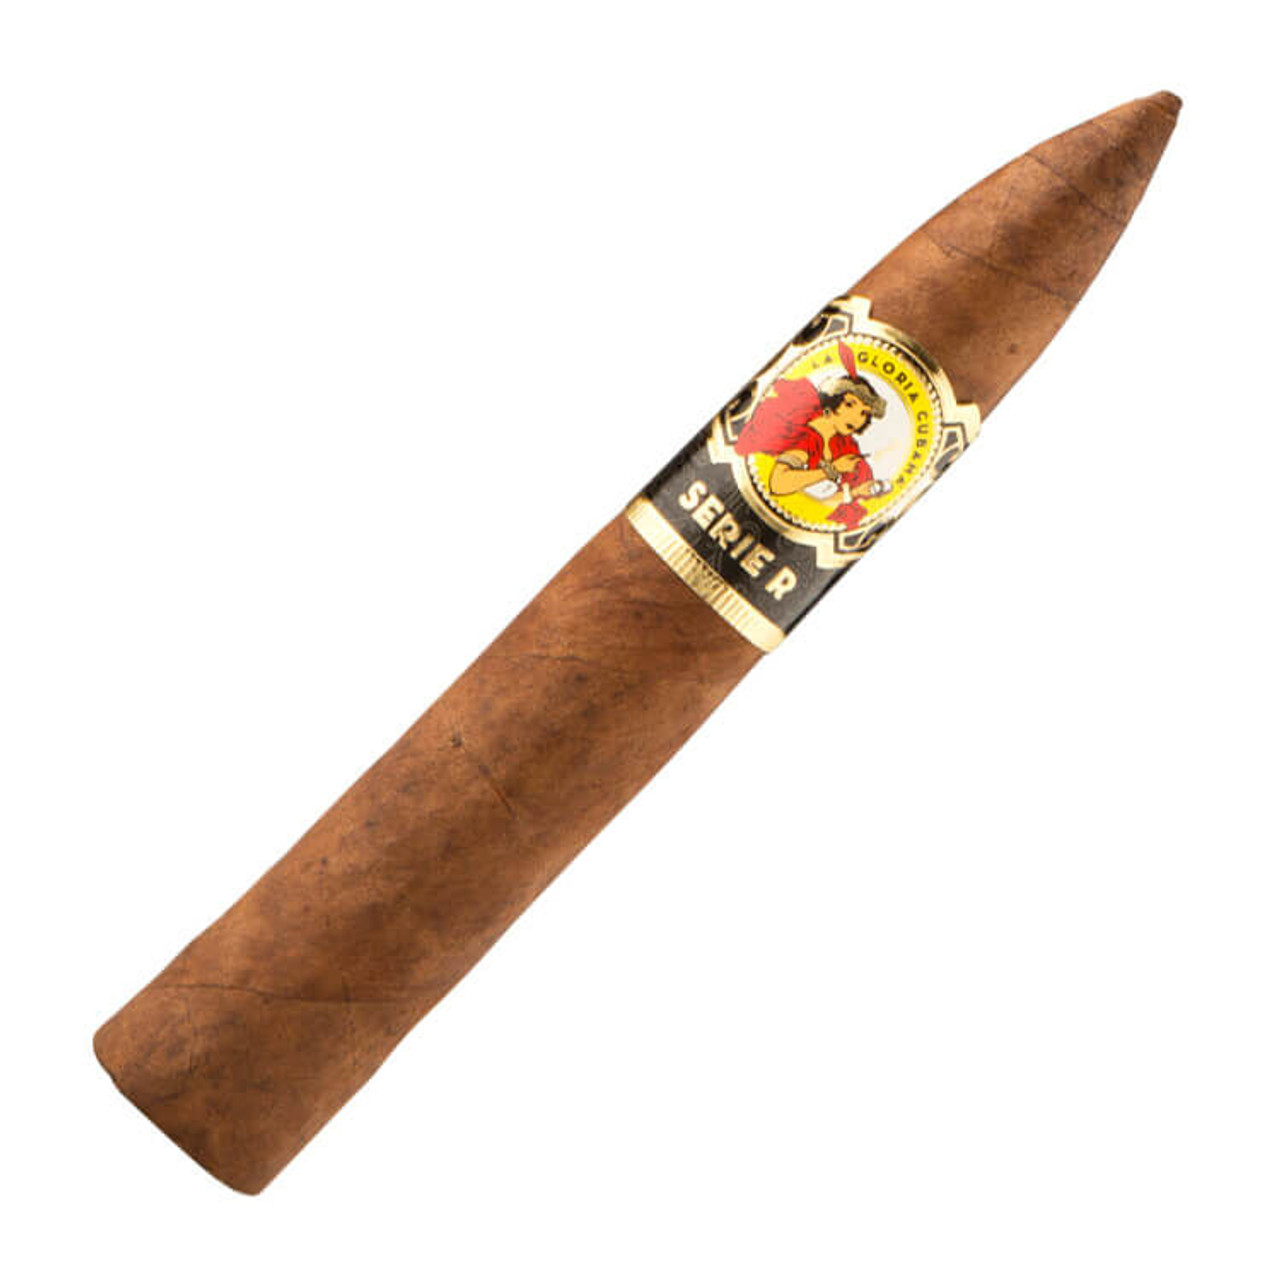 La Gloria Cubana Serie R Pyramid Cigars - 6 x 60 Single